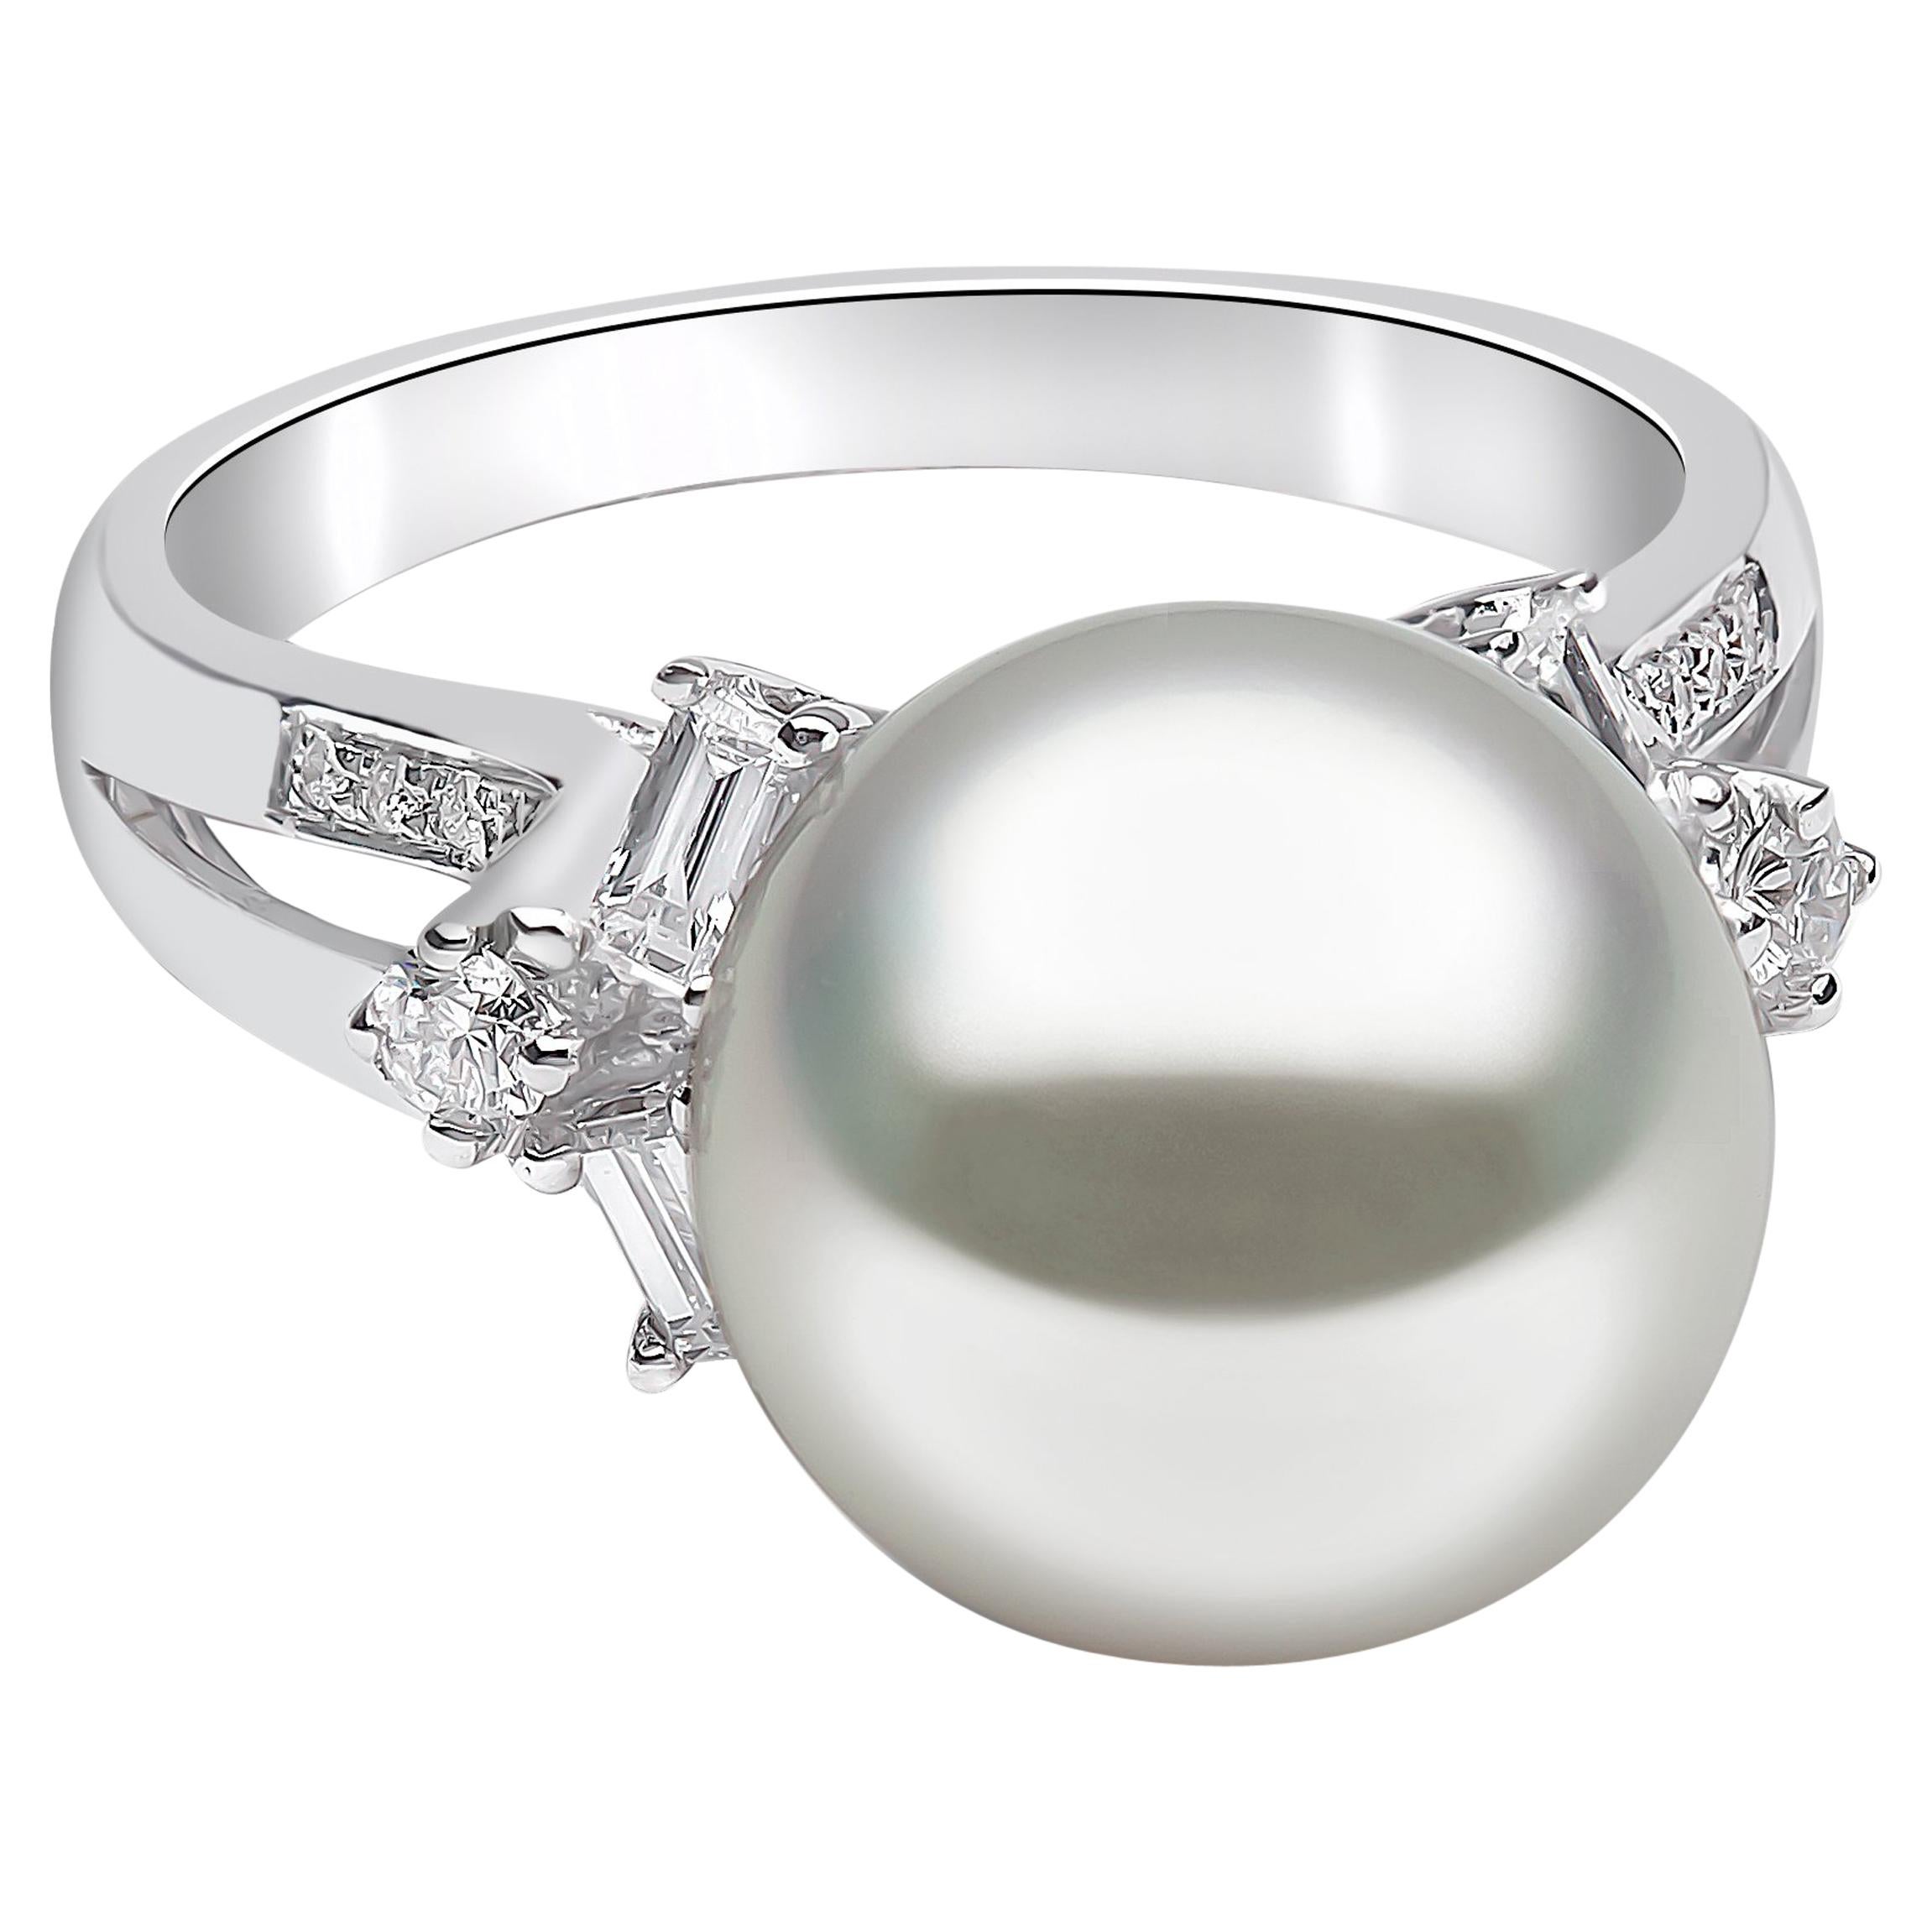 Yoko London South Sea Pearl and Diamond Ring Set in 18 Karat White Gold